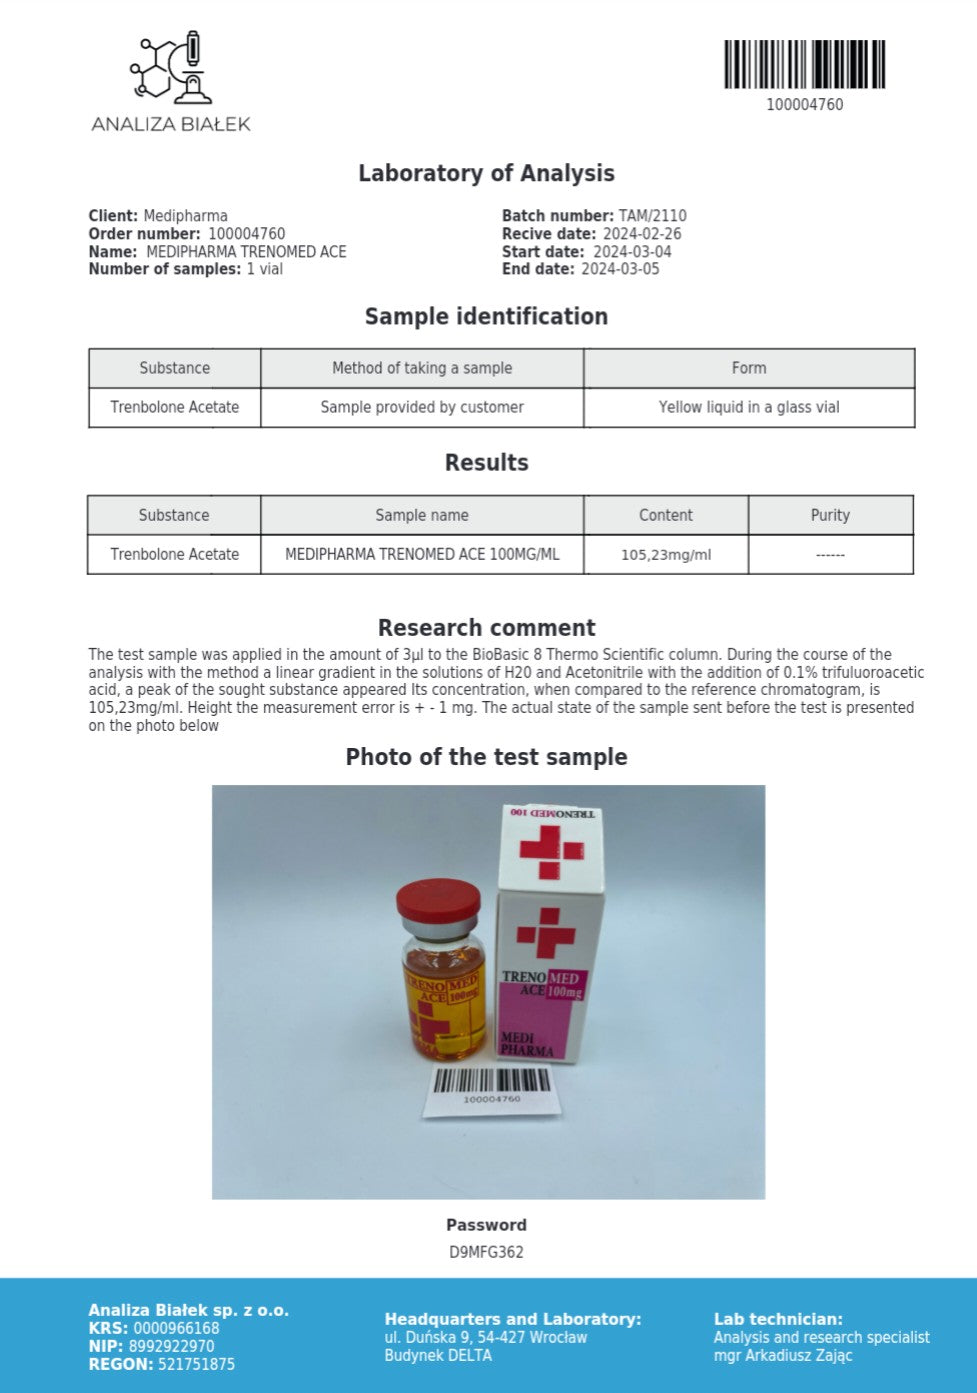 Medi Pharma Trenbolone Acetate (Trenomed Ace 100) 10ml/100mg/ml